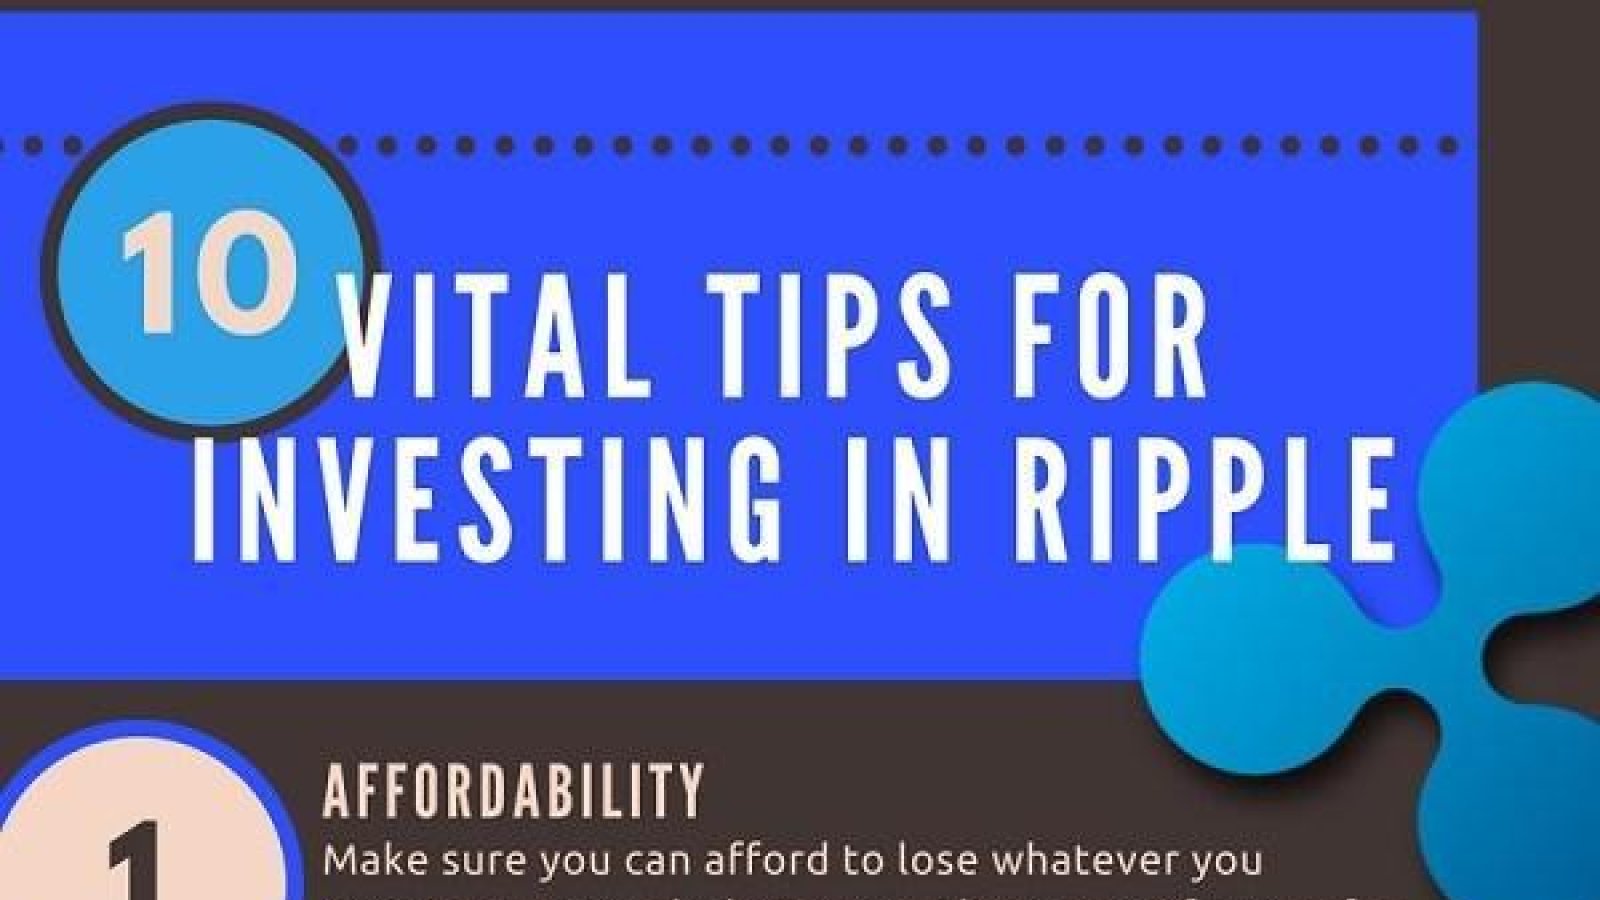 Pro tips for Ripple investors